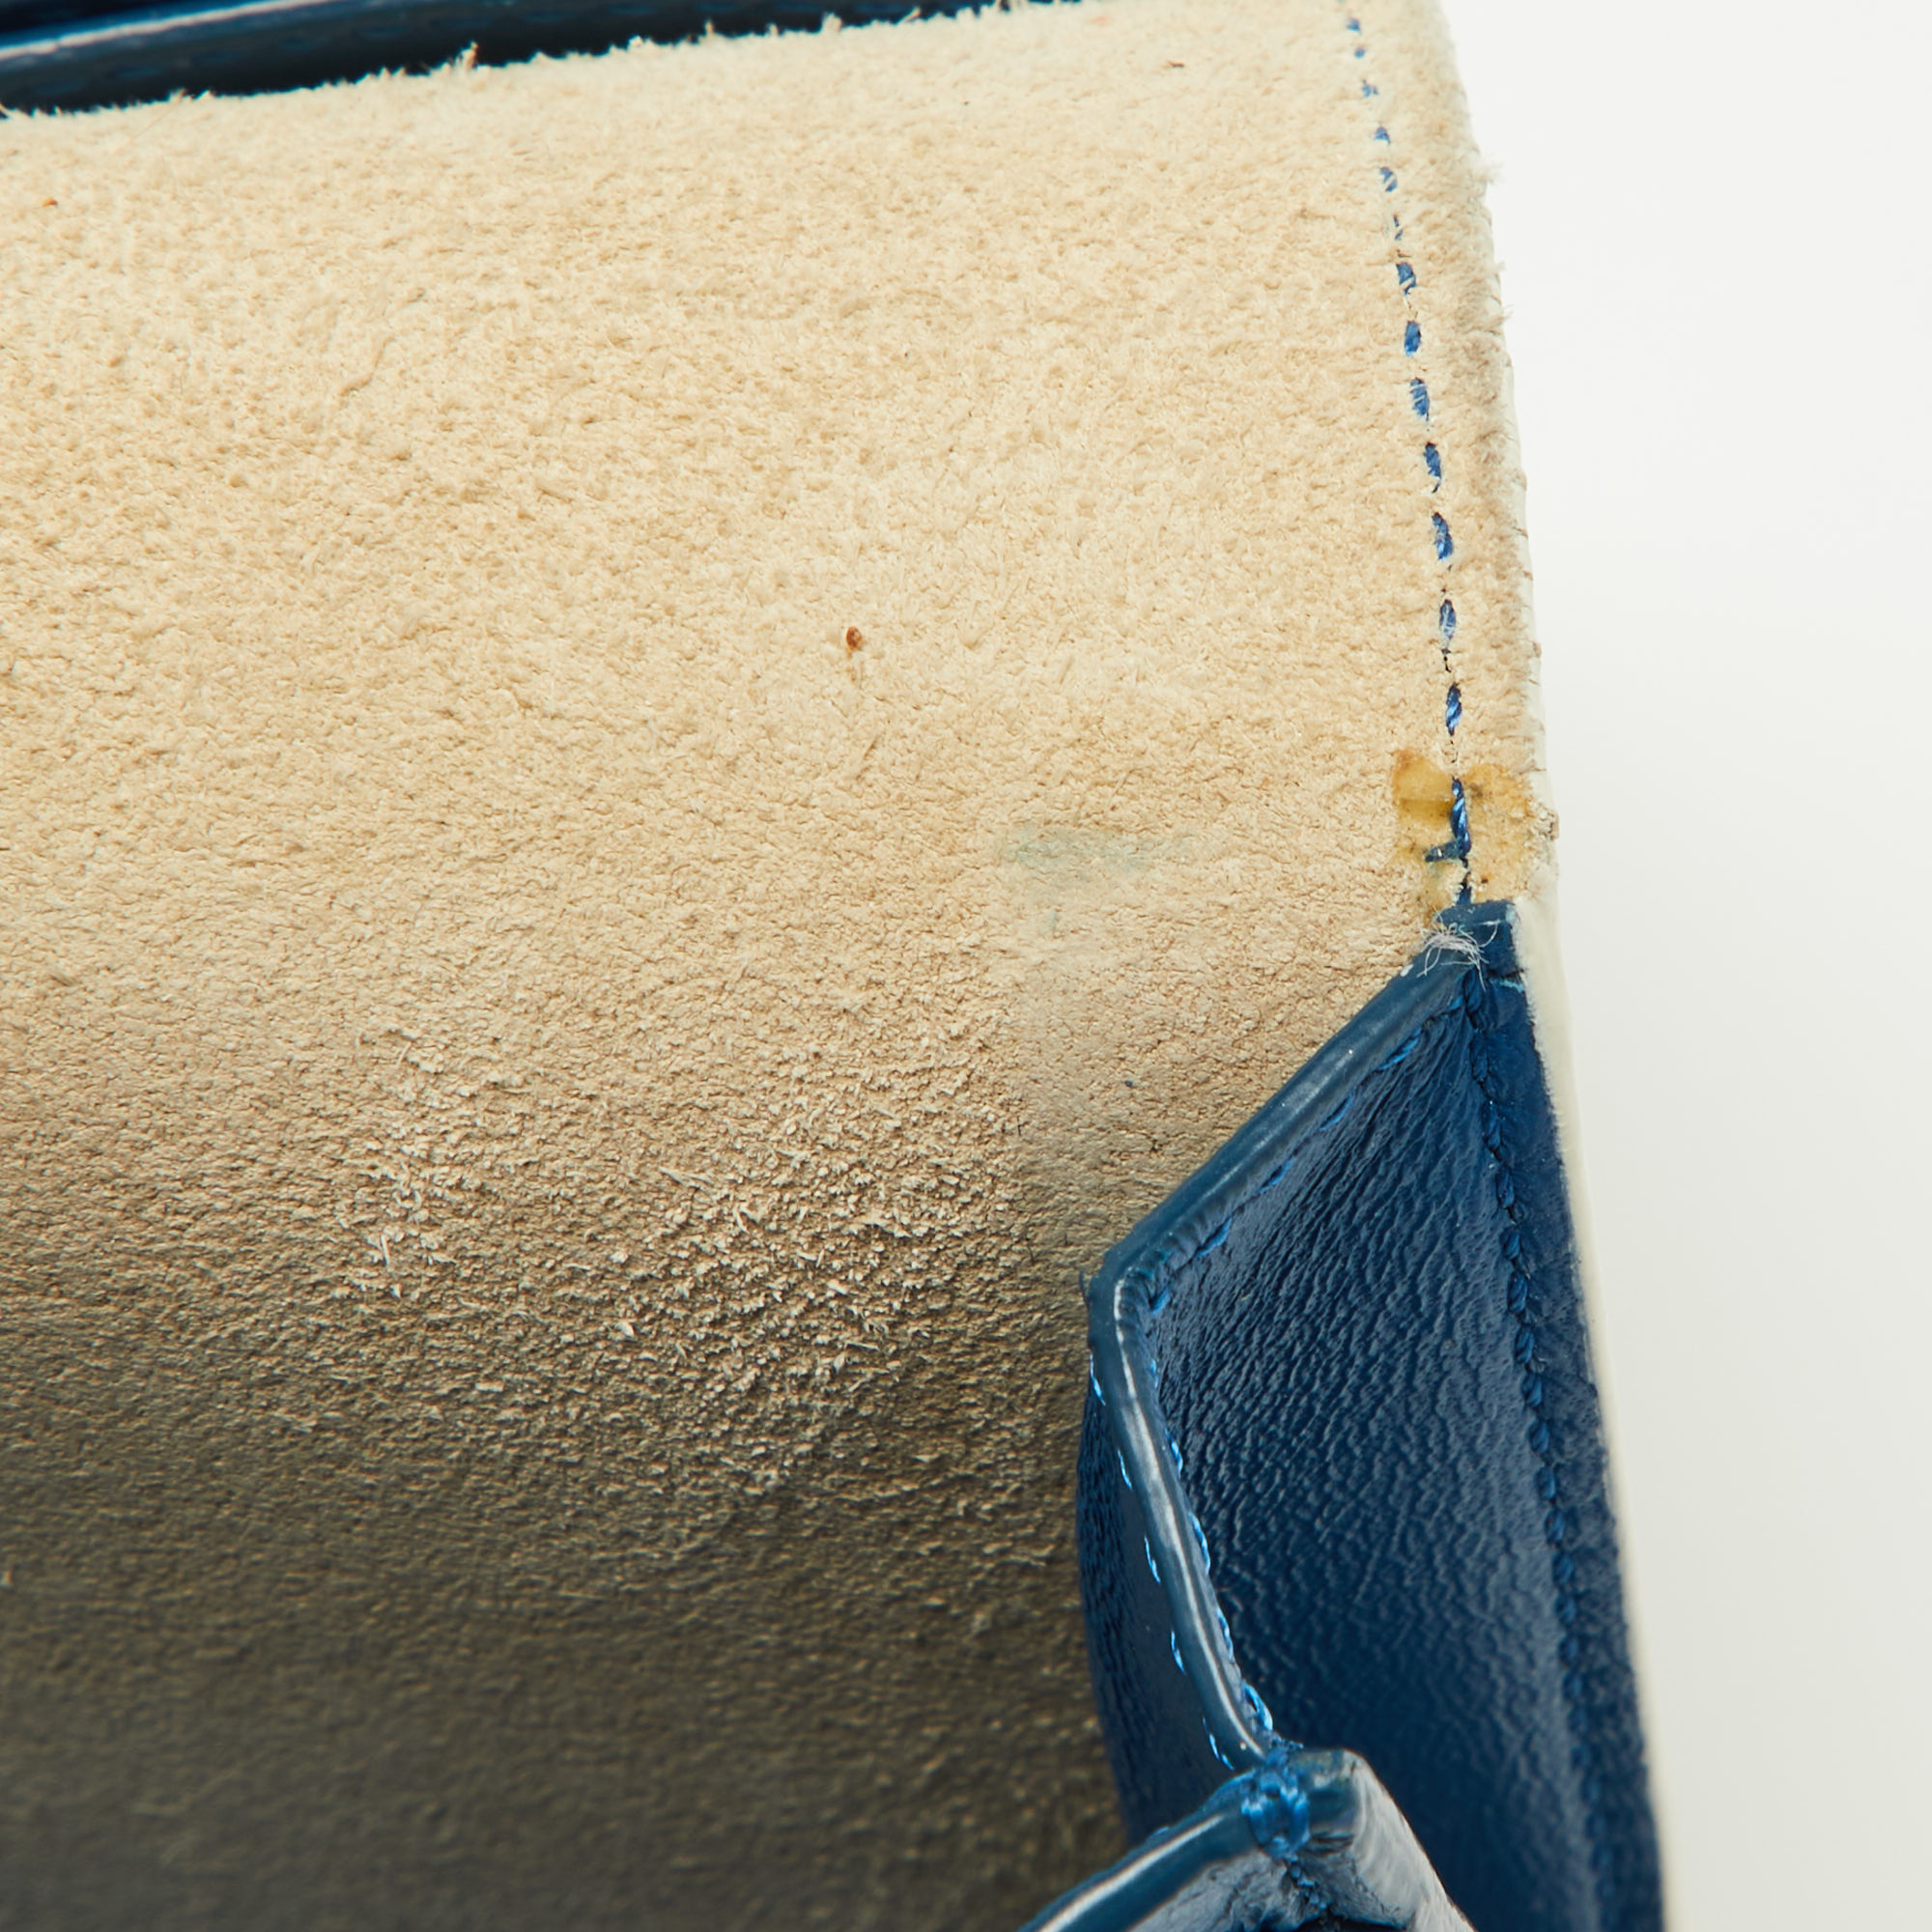 Celine Blue/Cream Leather Large Multifunction Strap Wallet